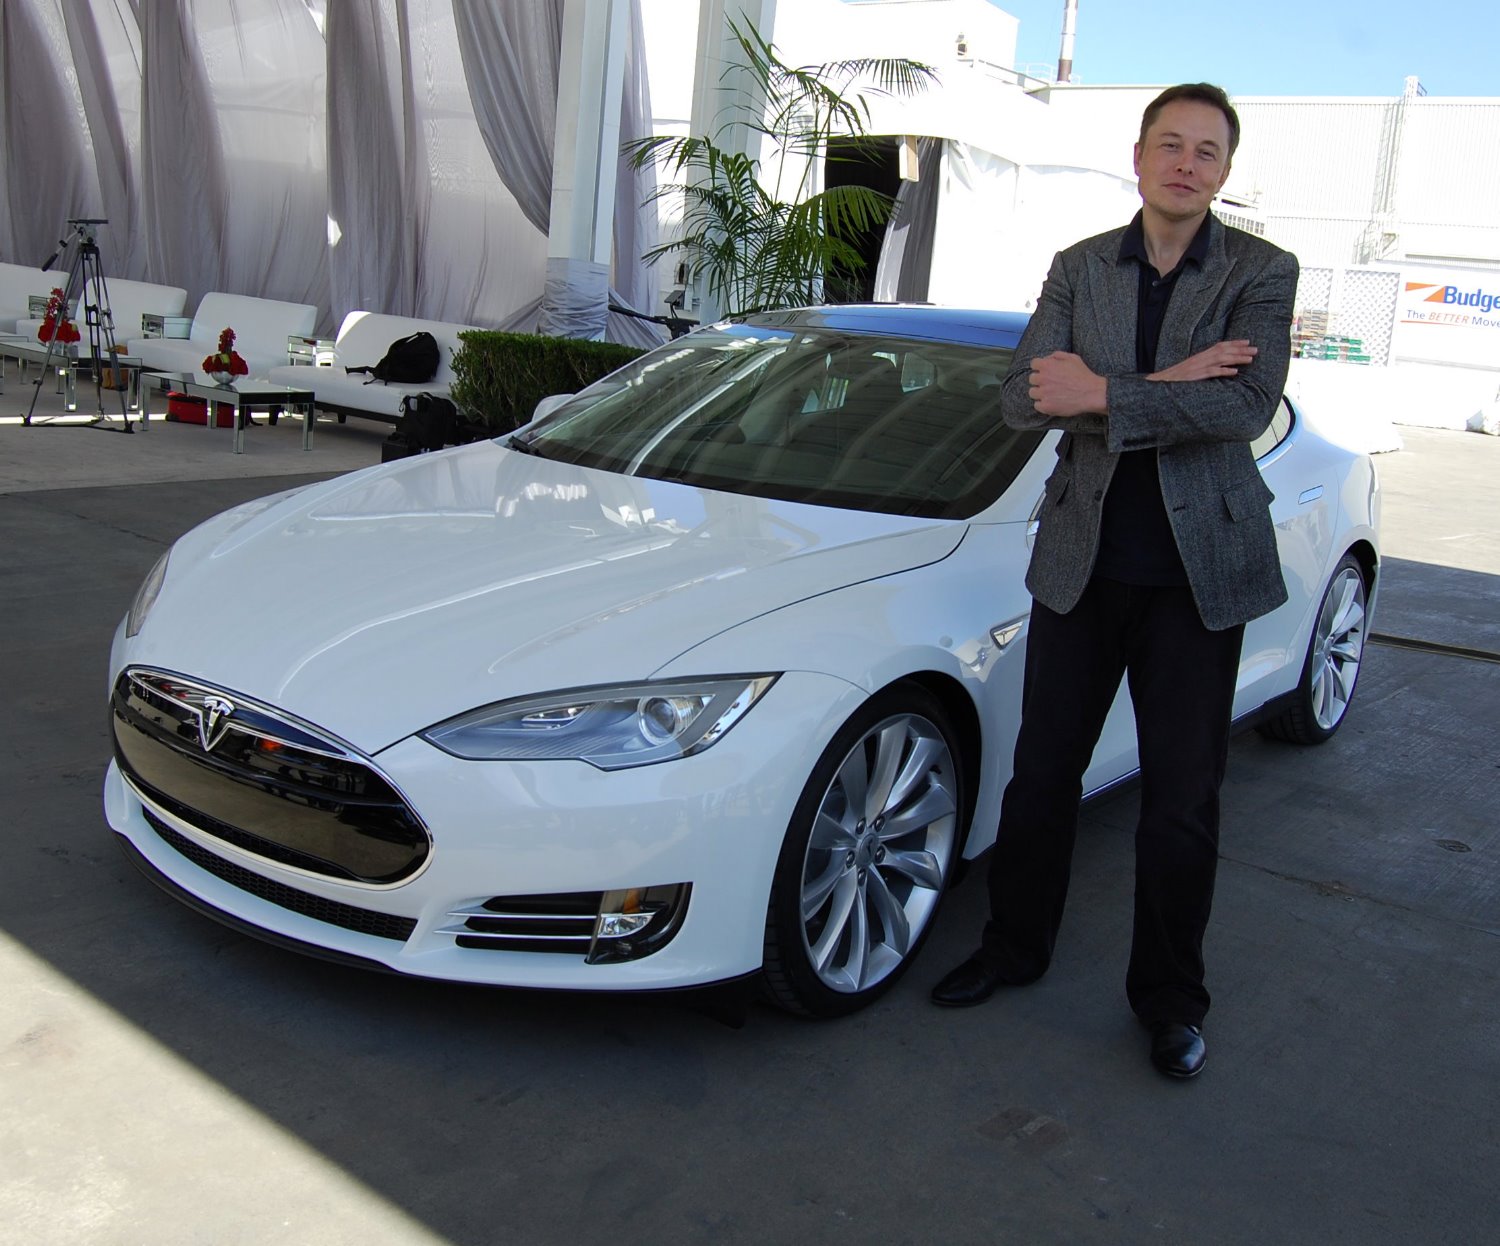 Musk is selling a lot of his Model Ss, but Tesla is still bleeding cash